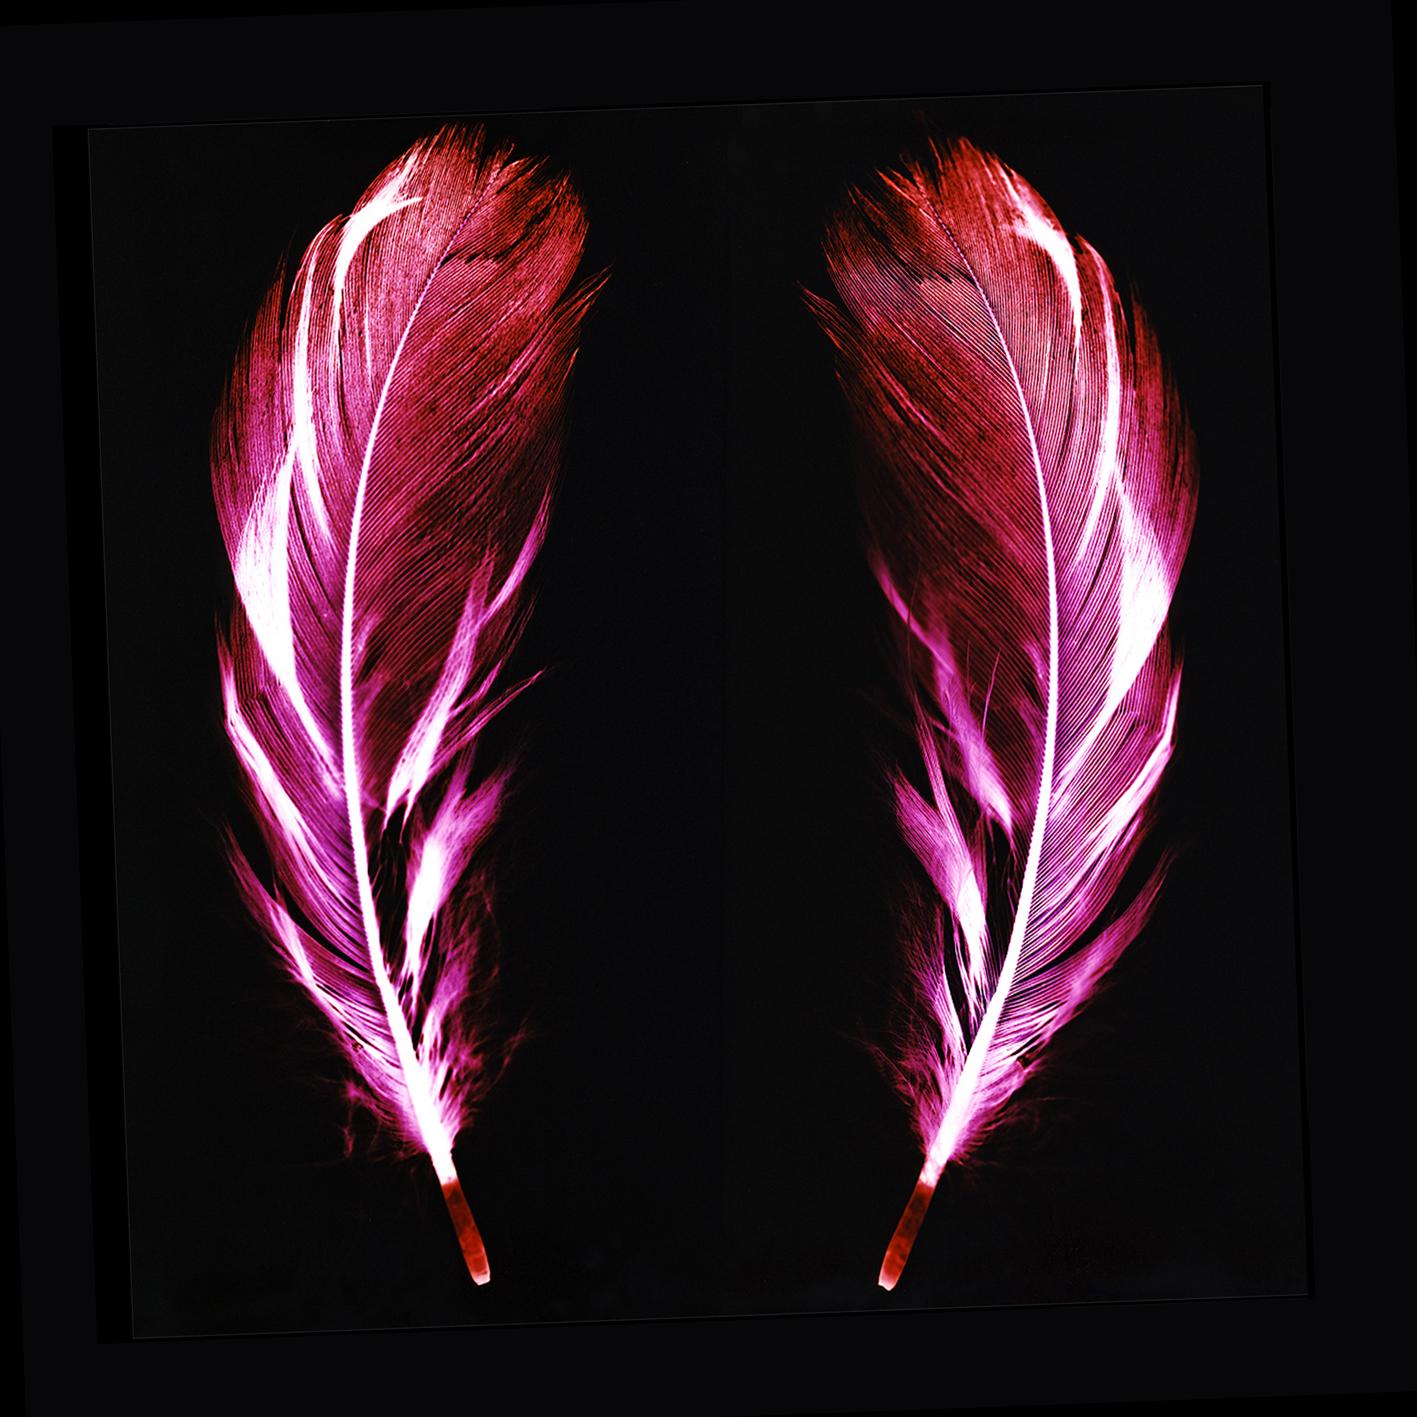 Flight of Fancy - Electric Pink Feathers - Konzeptionelle, Farbfotografie